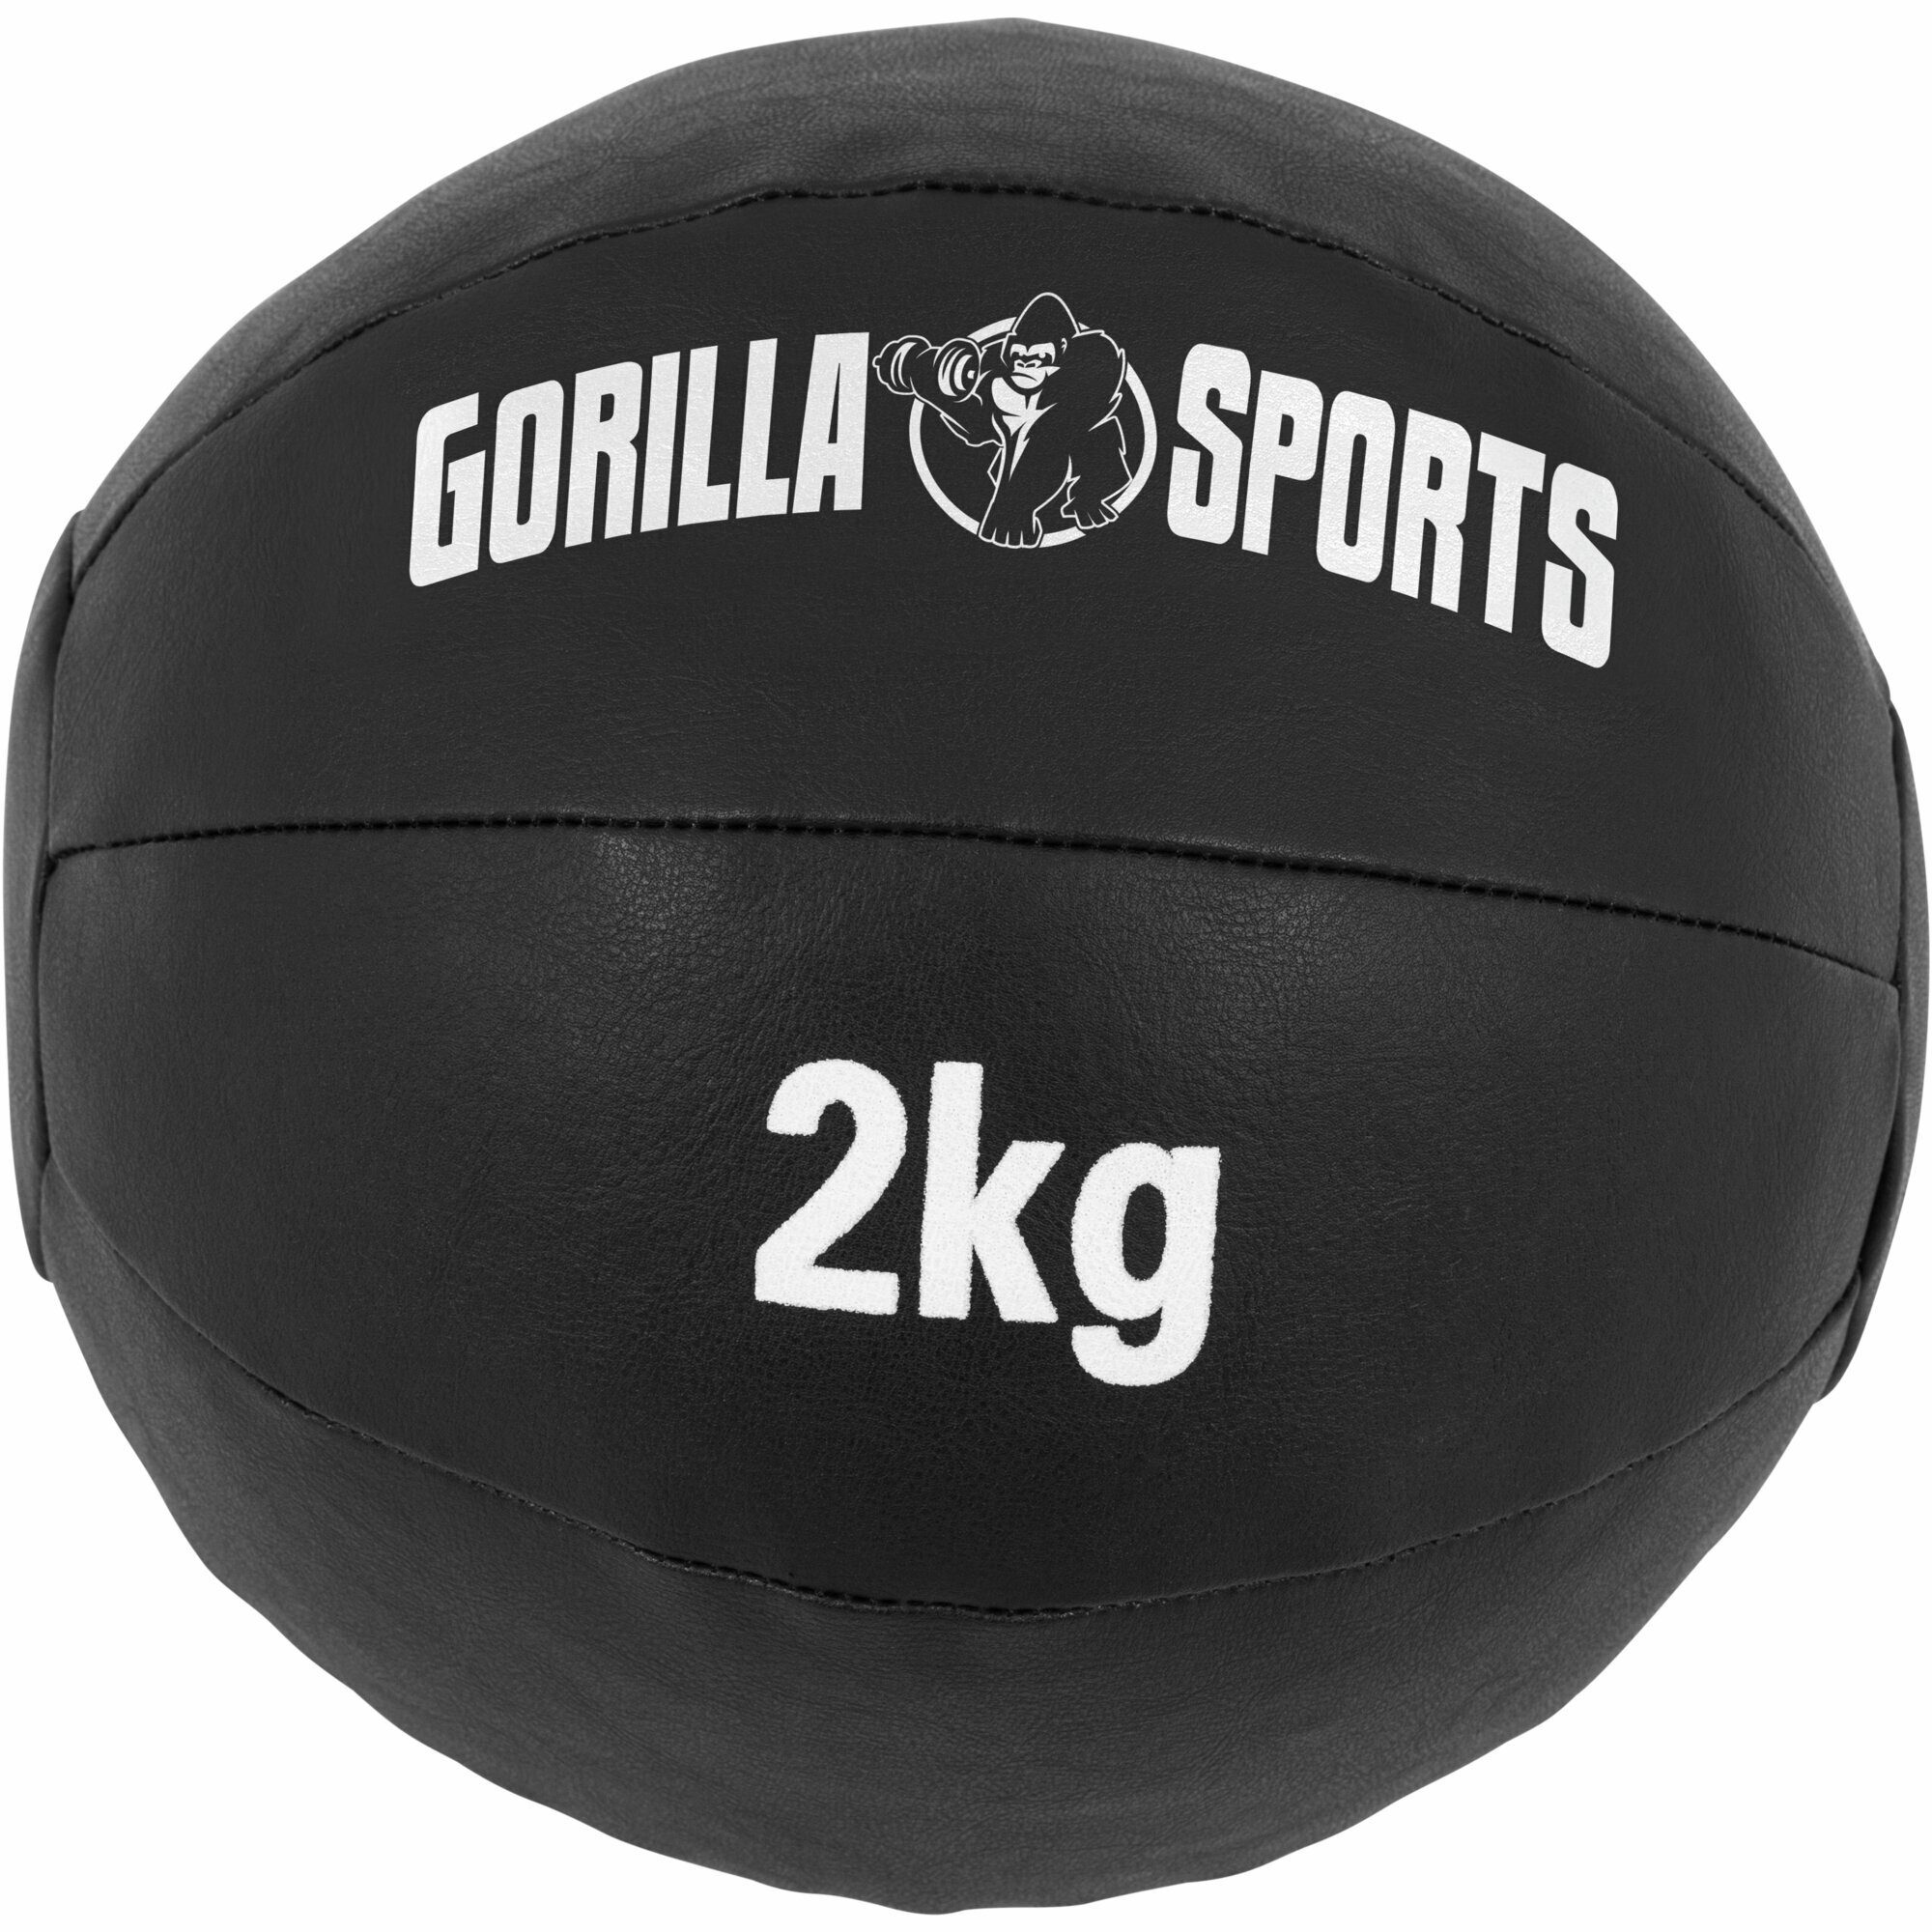 GORILLA SPORTS Einzeln/Set, aus kg 2 Medizinball 29cm, Trainingsball, Fitnessball, Leder, Gewichtsball